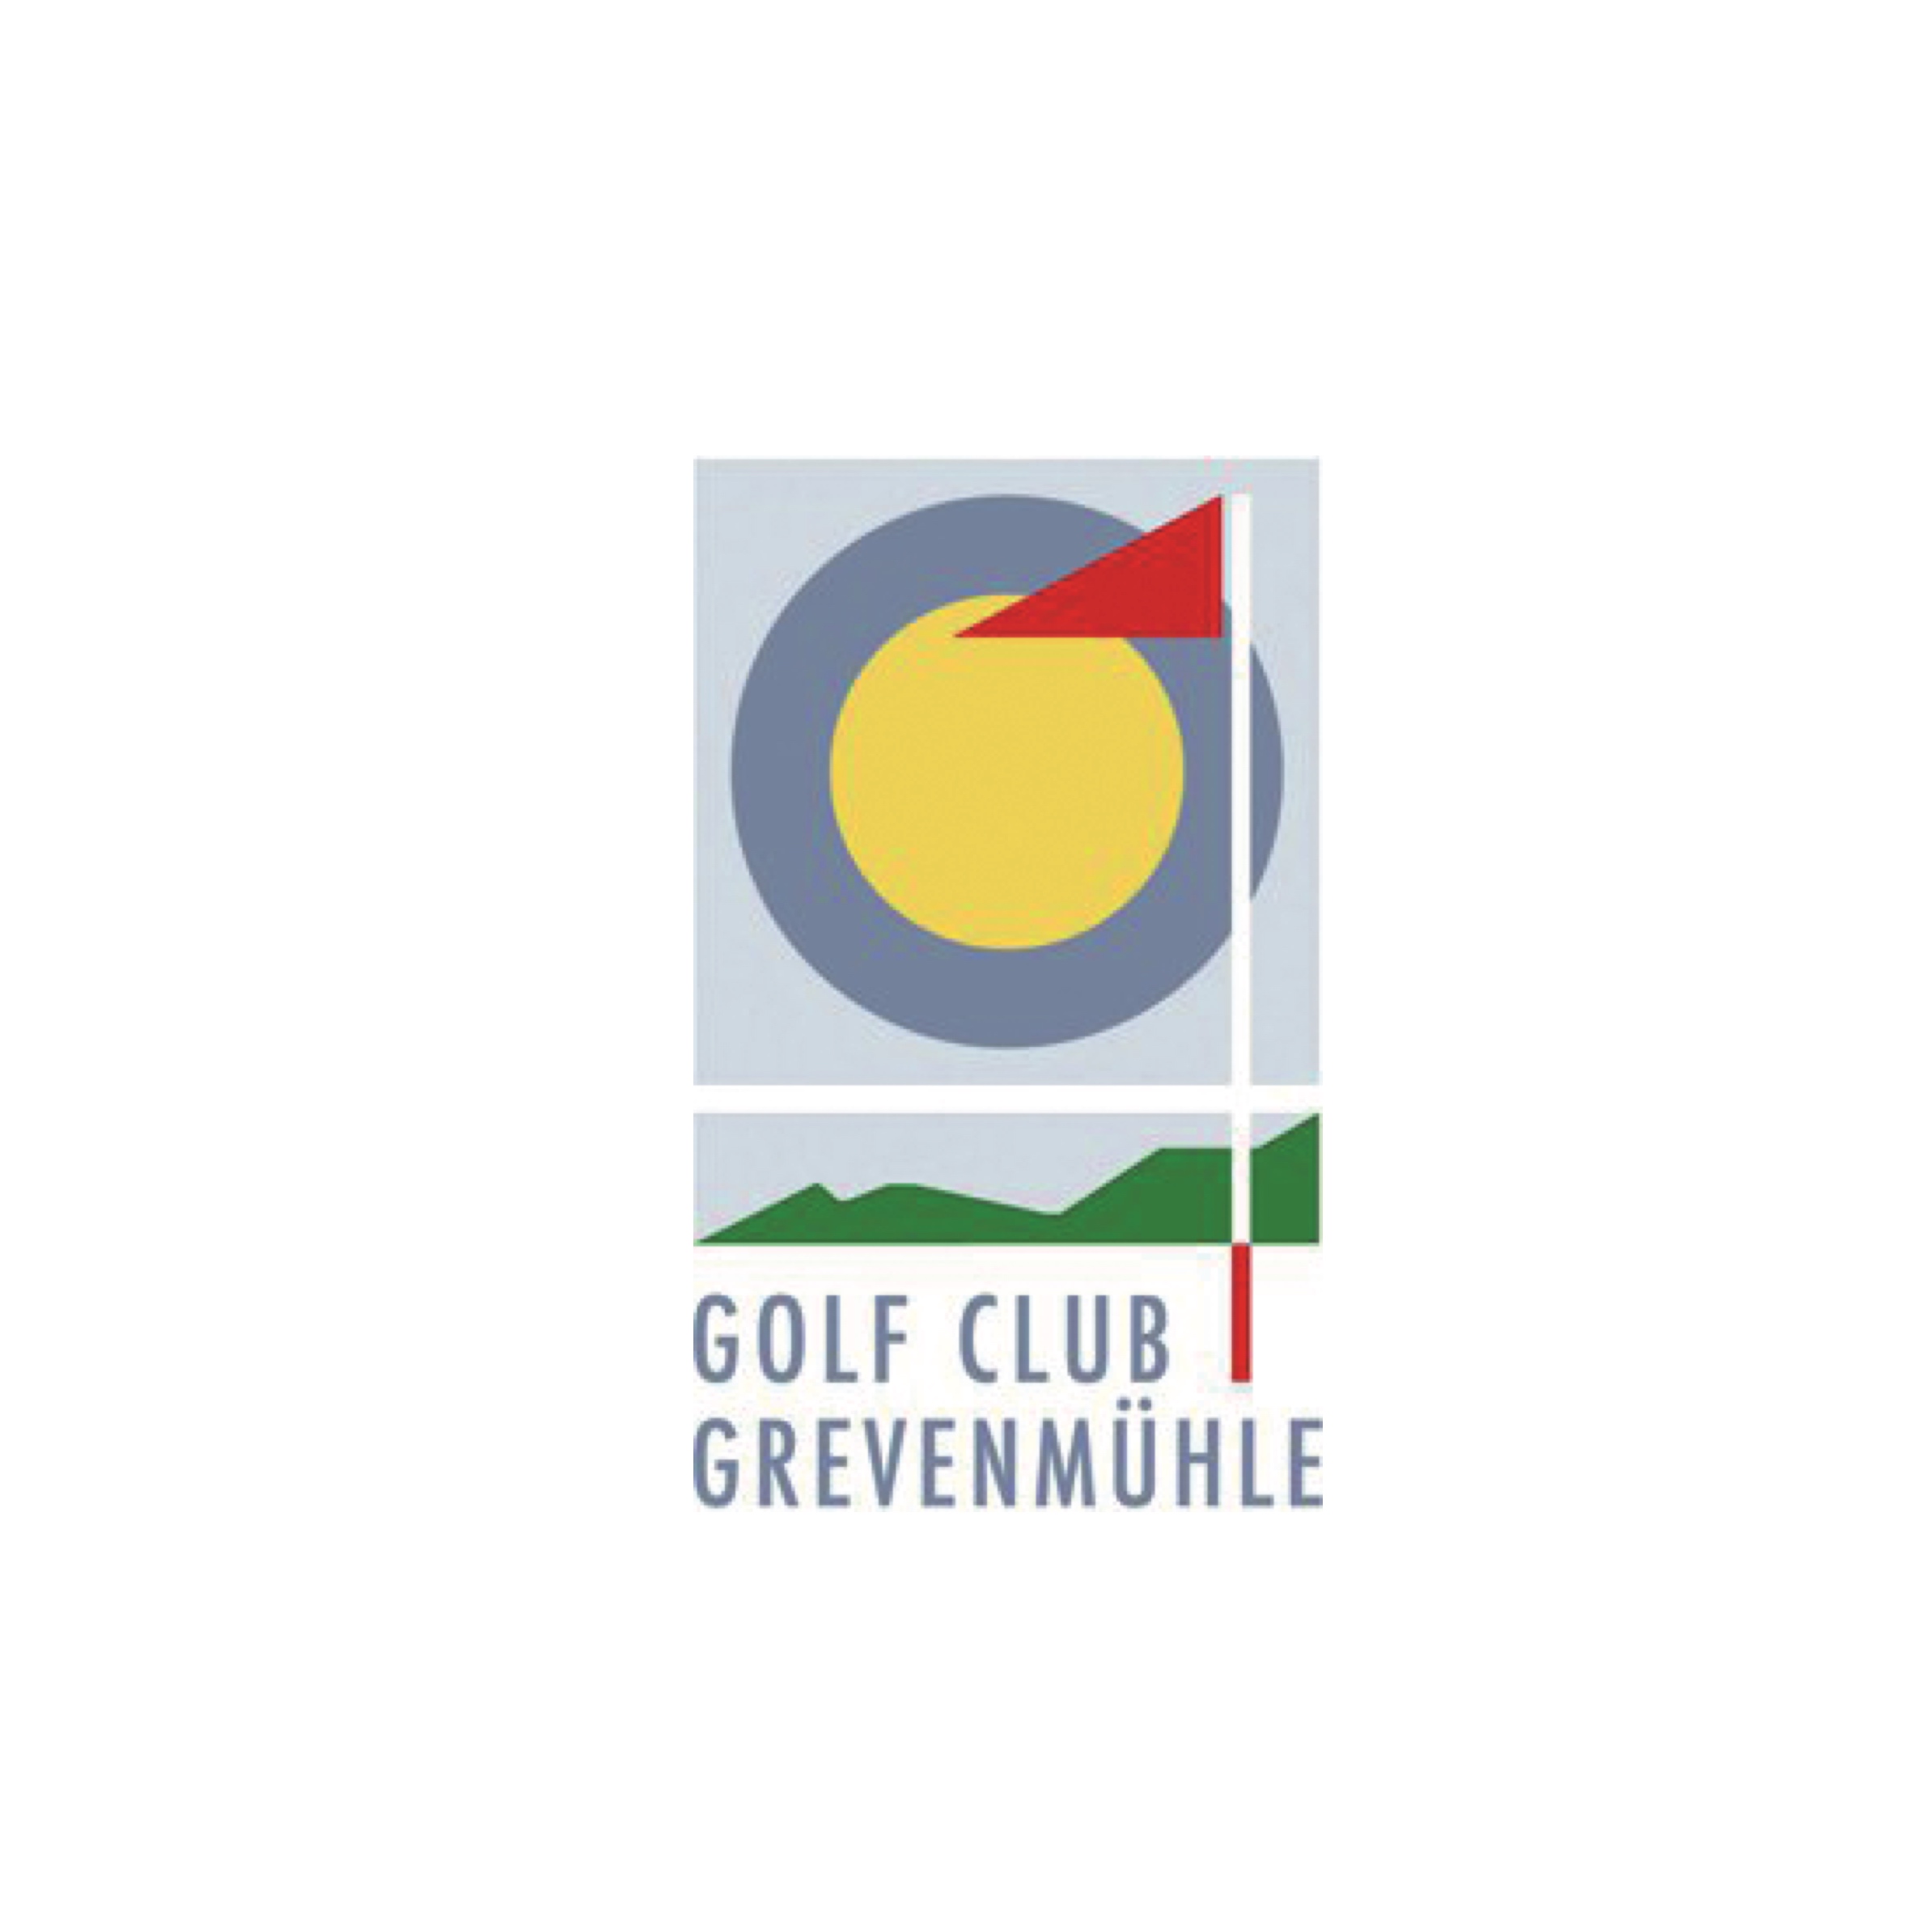 26. Grevenmühle (Golf Club Grevenmühle)